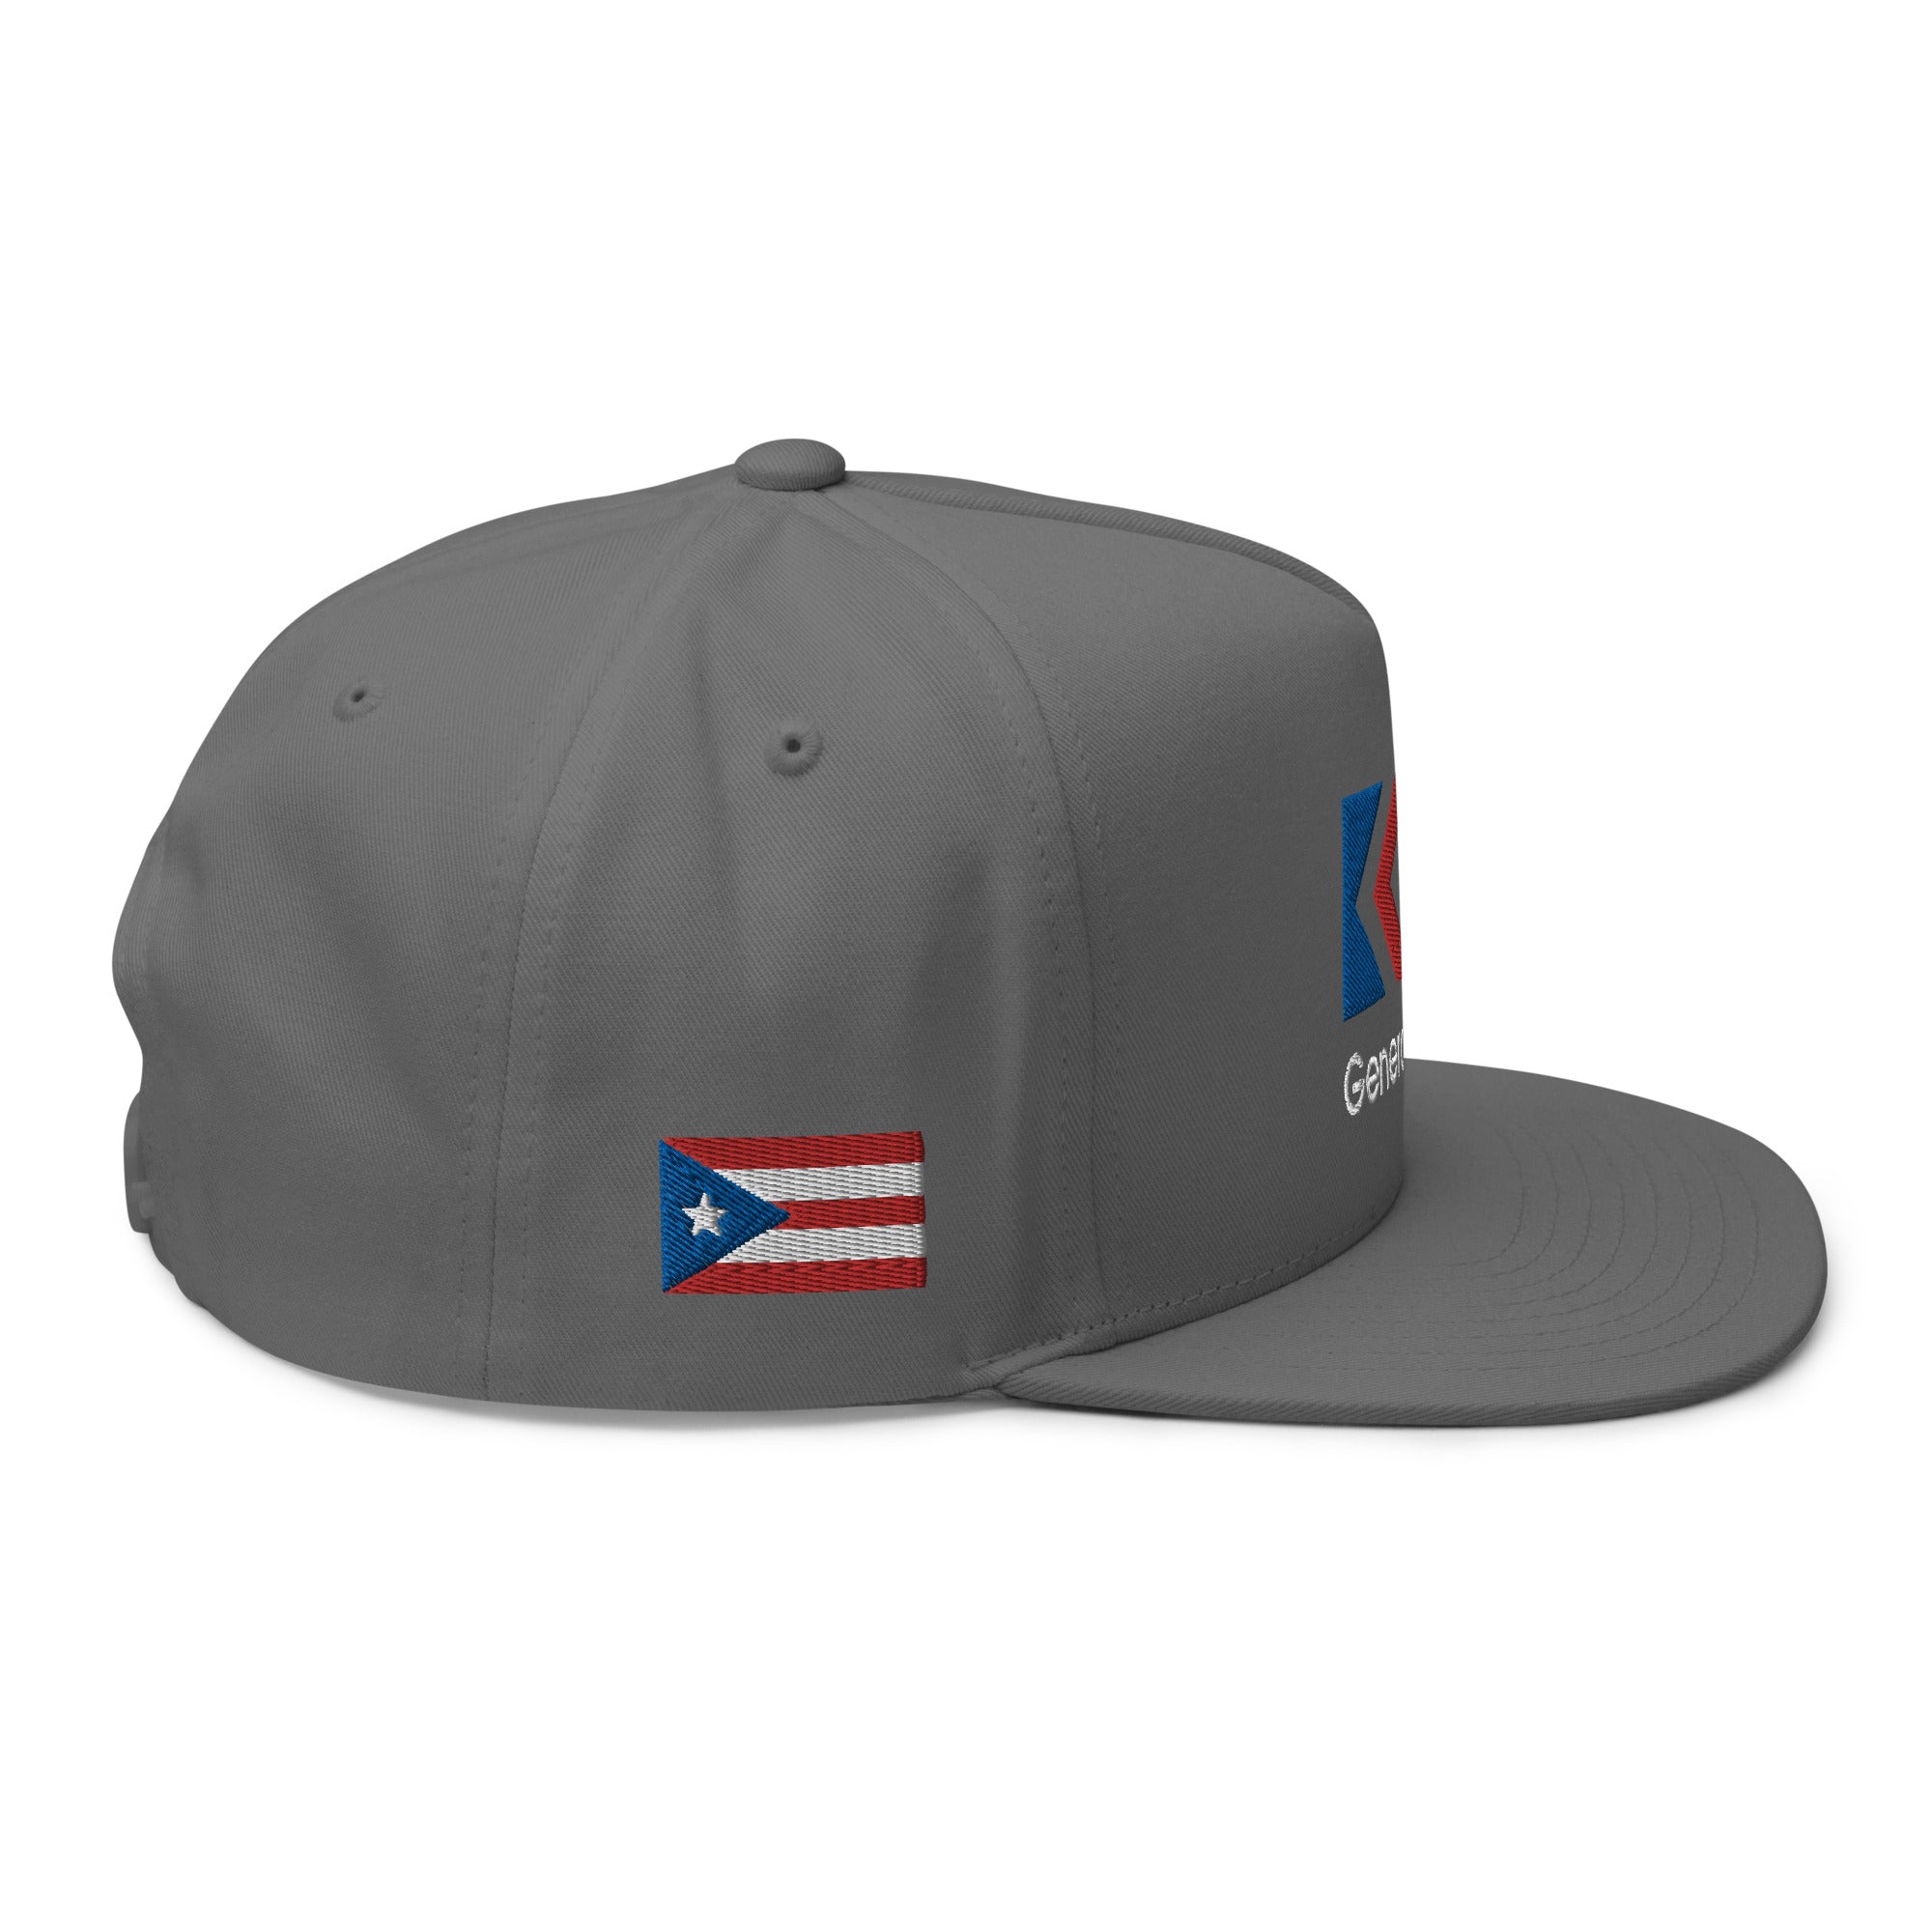 🇵🇷 Puerto Rico Triple K G 3D Snap Back